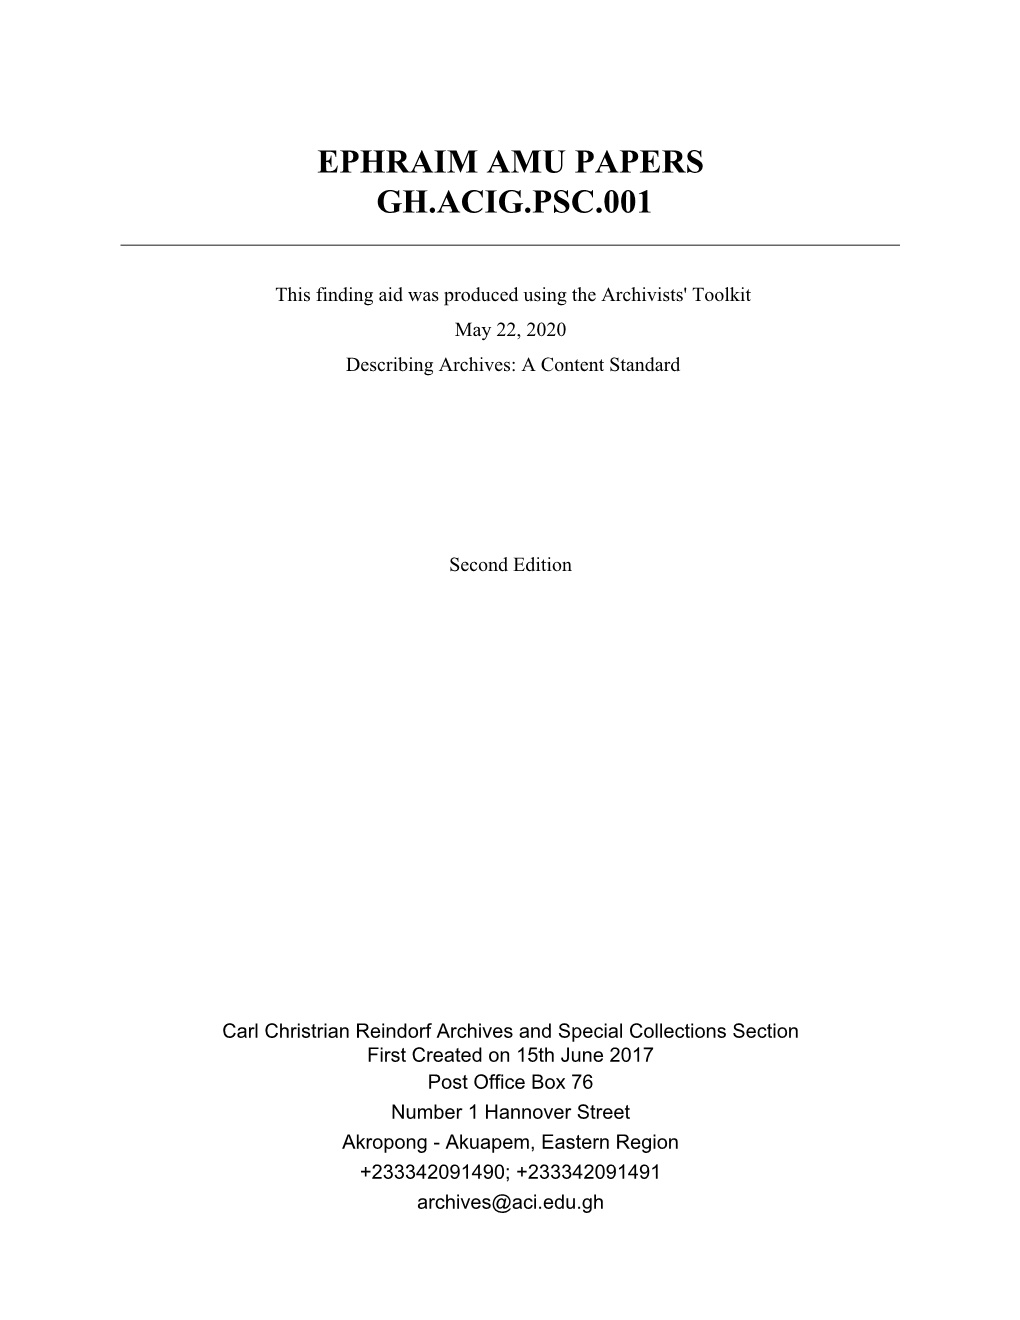 Ephraim Amu Papers Gh.Acig.Psc.001